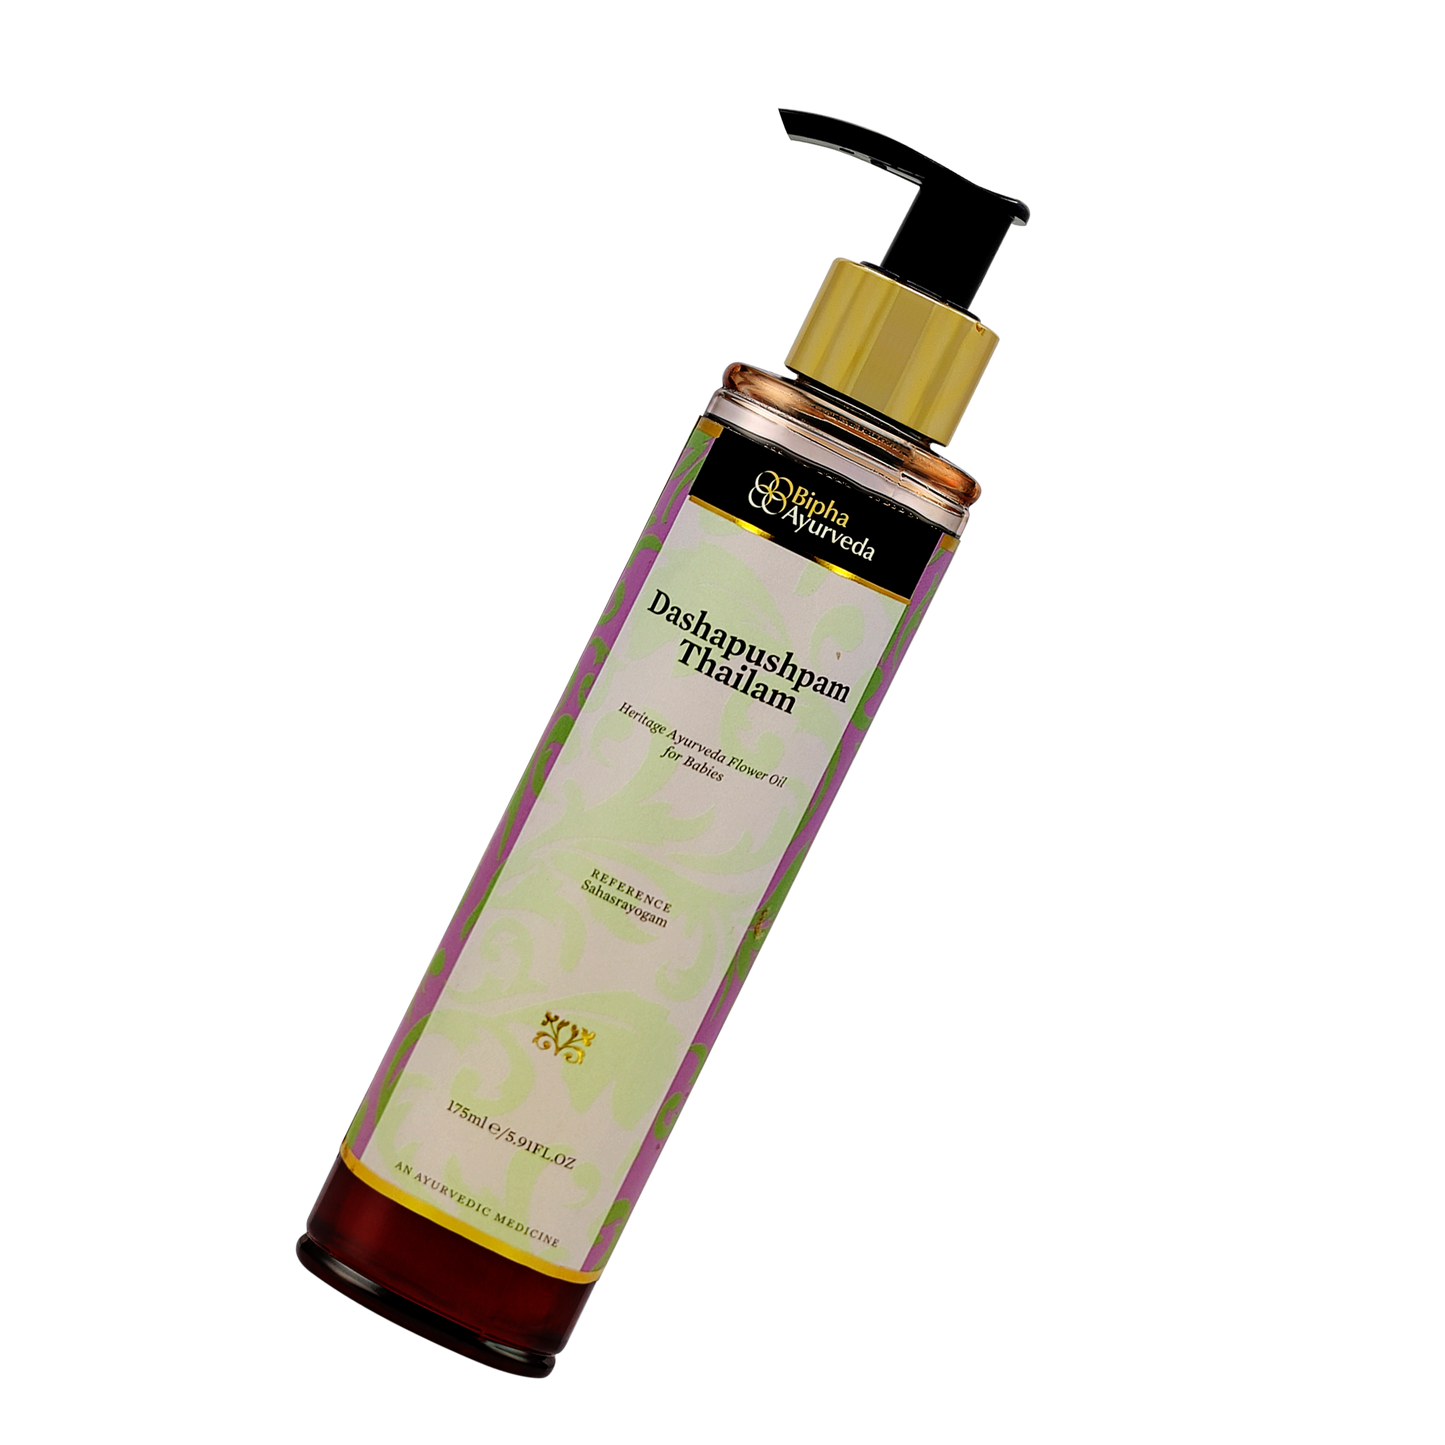 Dhurdhurapathradi Ayurveda oil - Traditional ayurveda recipe for dandruff control and healthy scalp . 100 % Natural formulation- 175ml